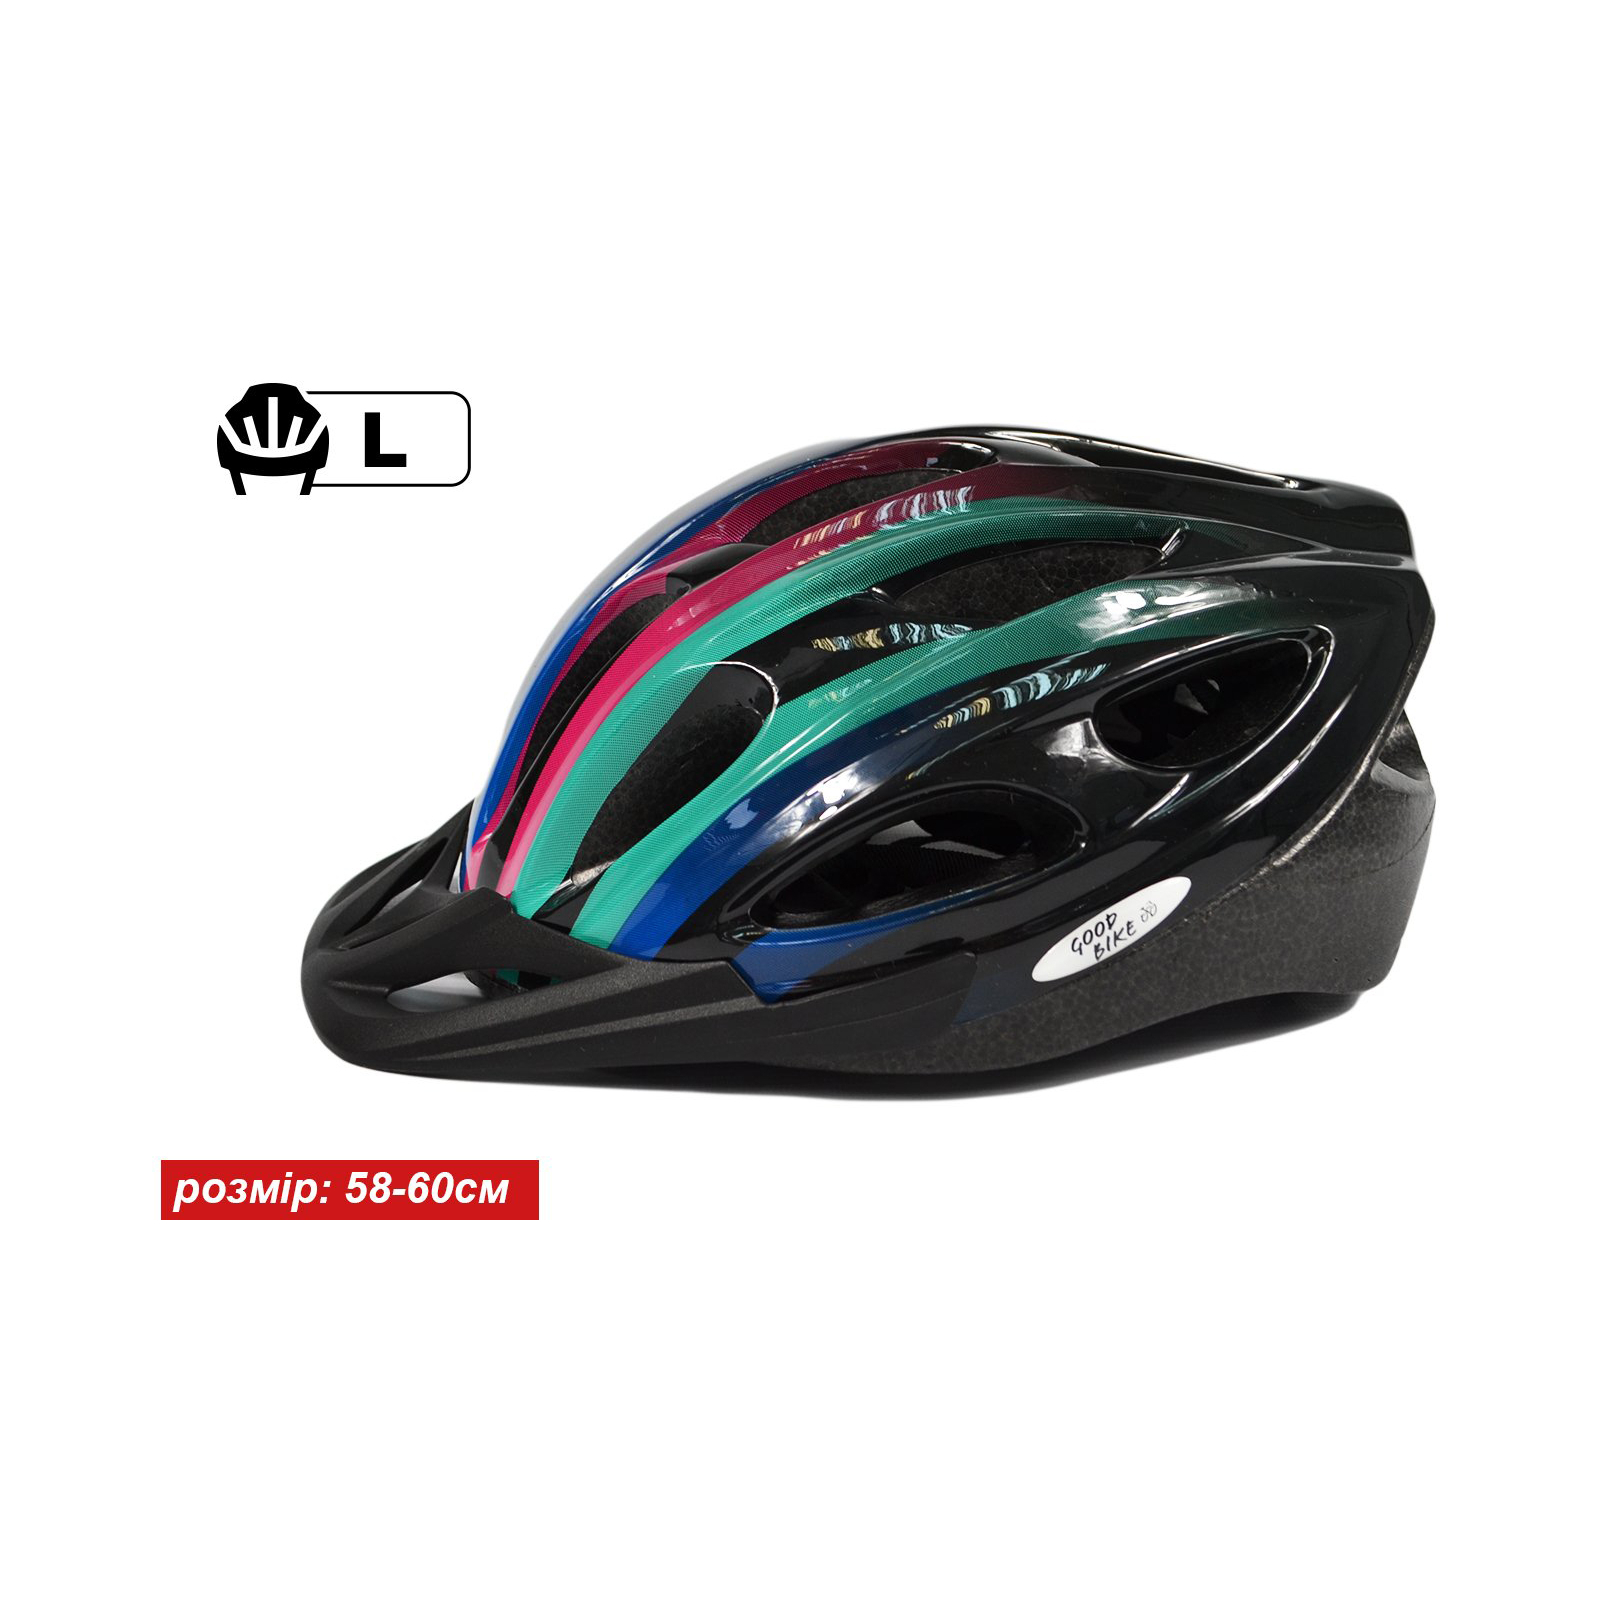 Шлем Good Bike L 58-60 см Pink (88855/1-IS) изображение 2